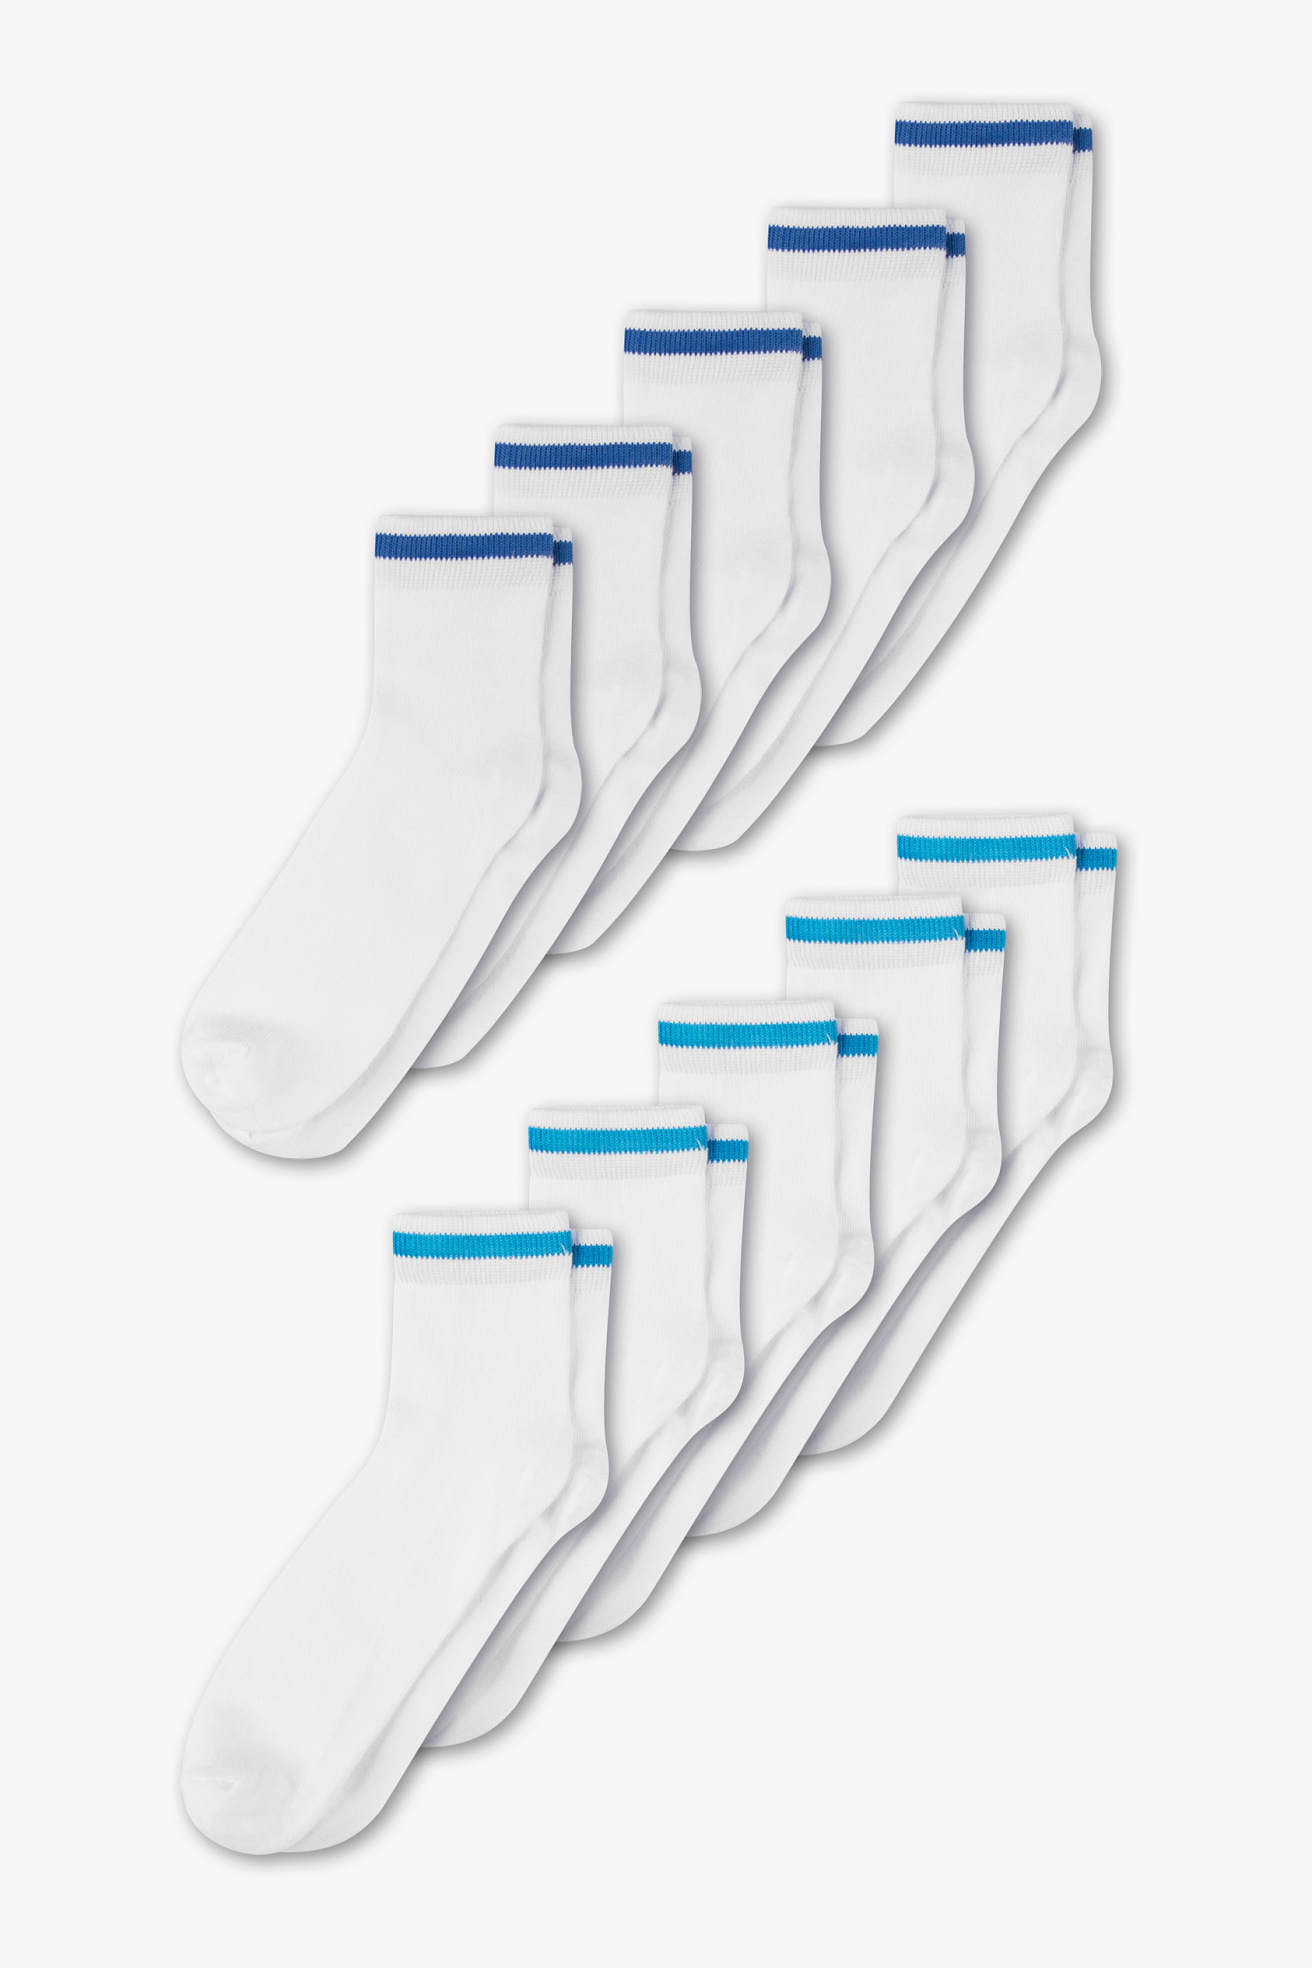 puma men's socks (10 pairs)